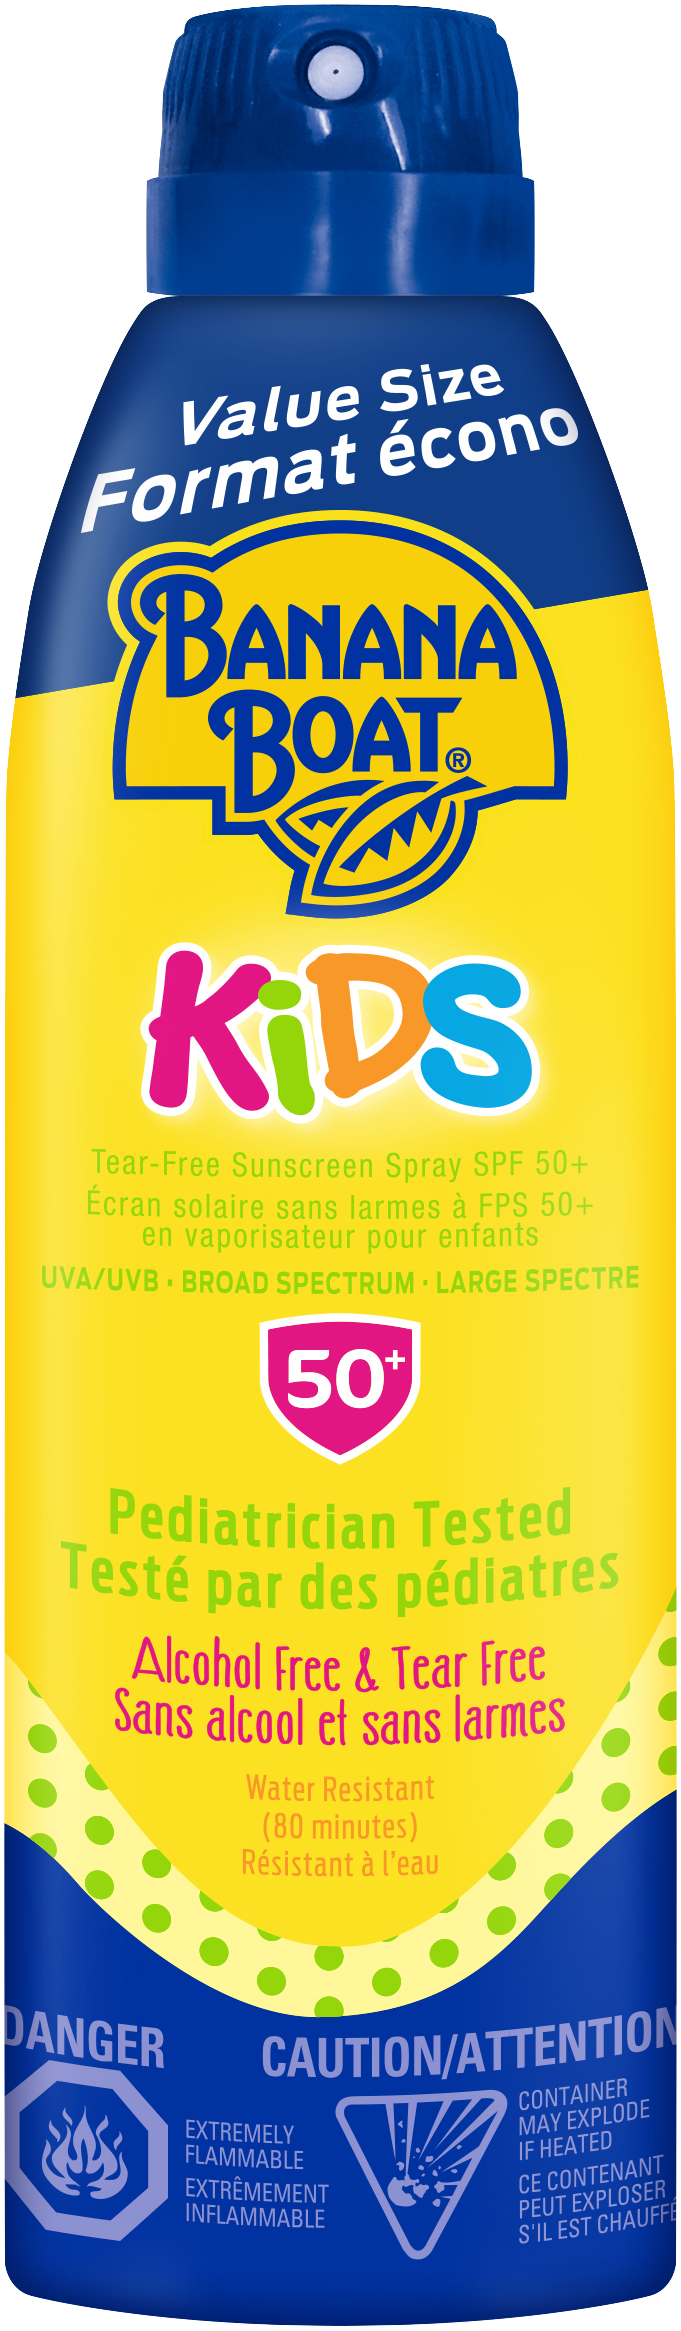 Banana Boat Kids Tear-Free Sunscreen Spray SPF 50+ 226g - Quecan